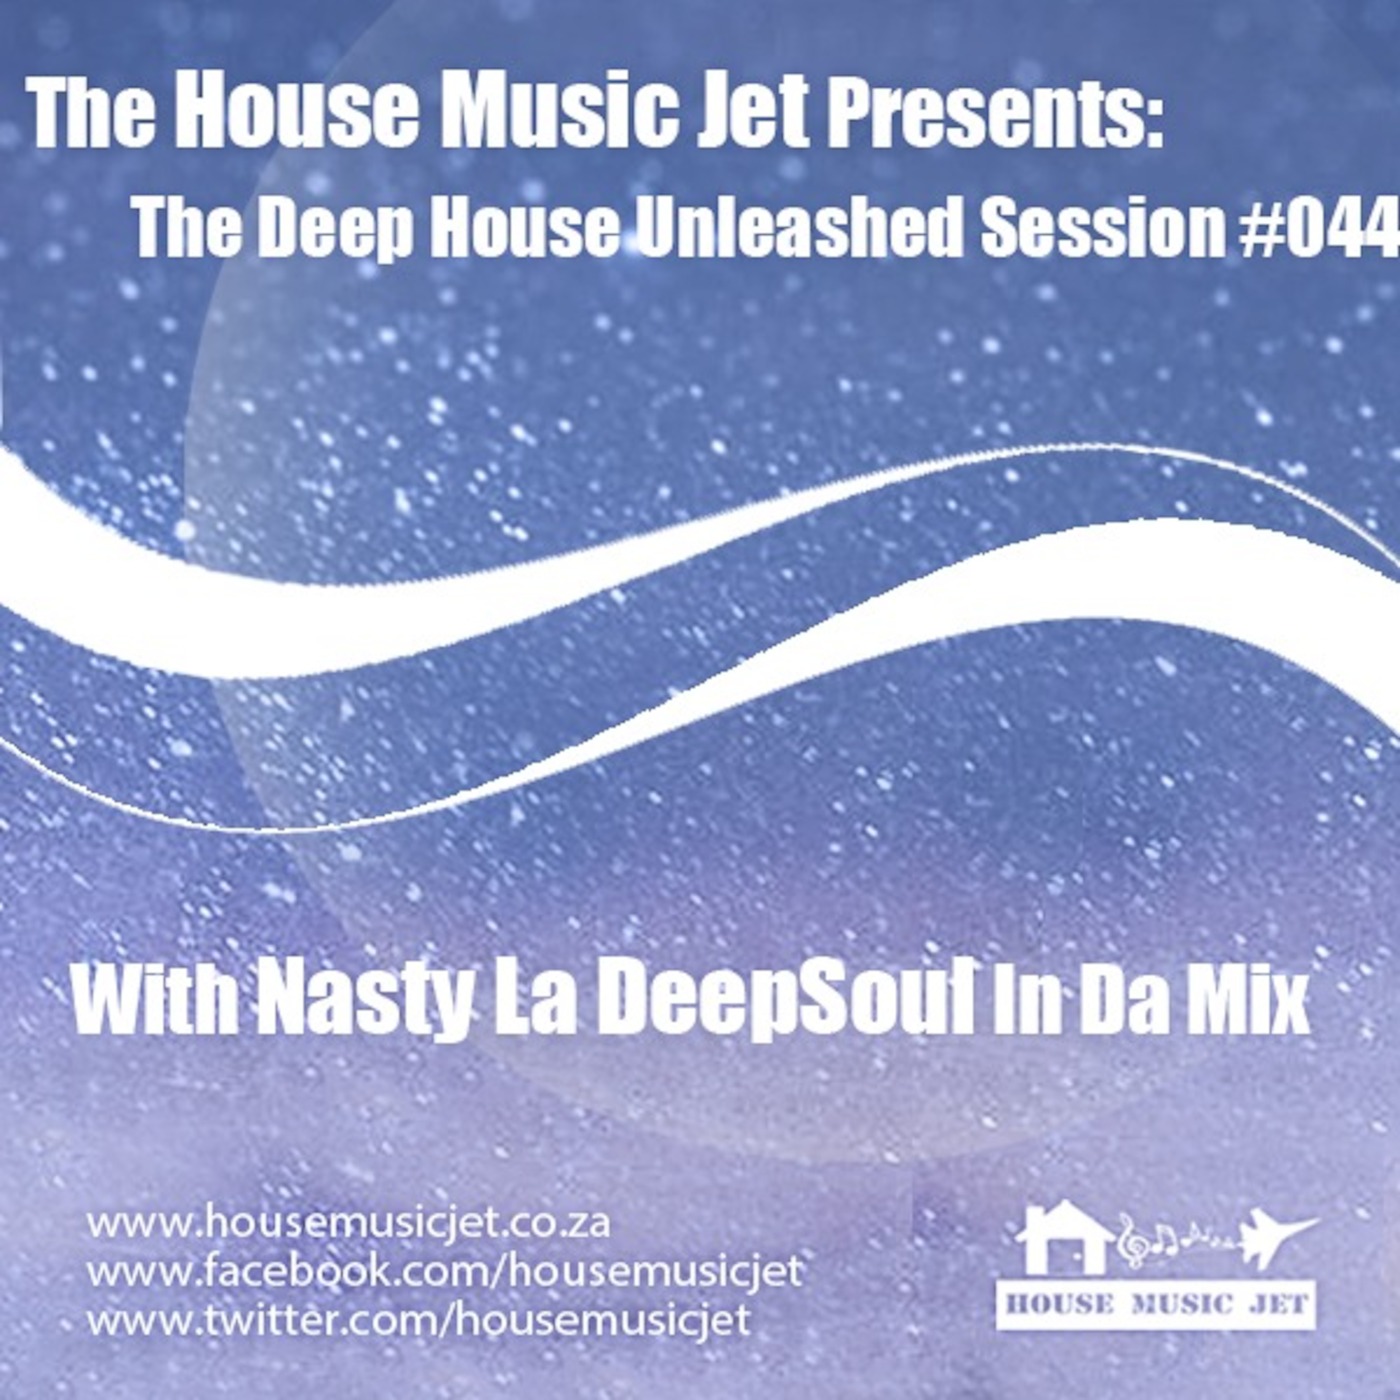 Nasty La DeepSoul In Da Mix – Deep House Unleashed Session 44